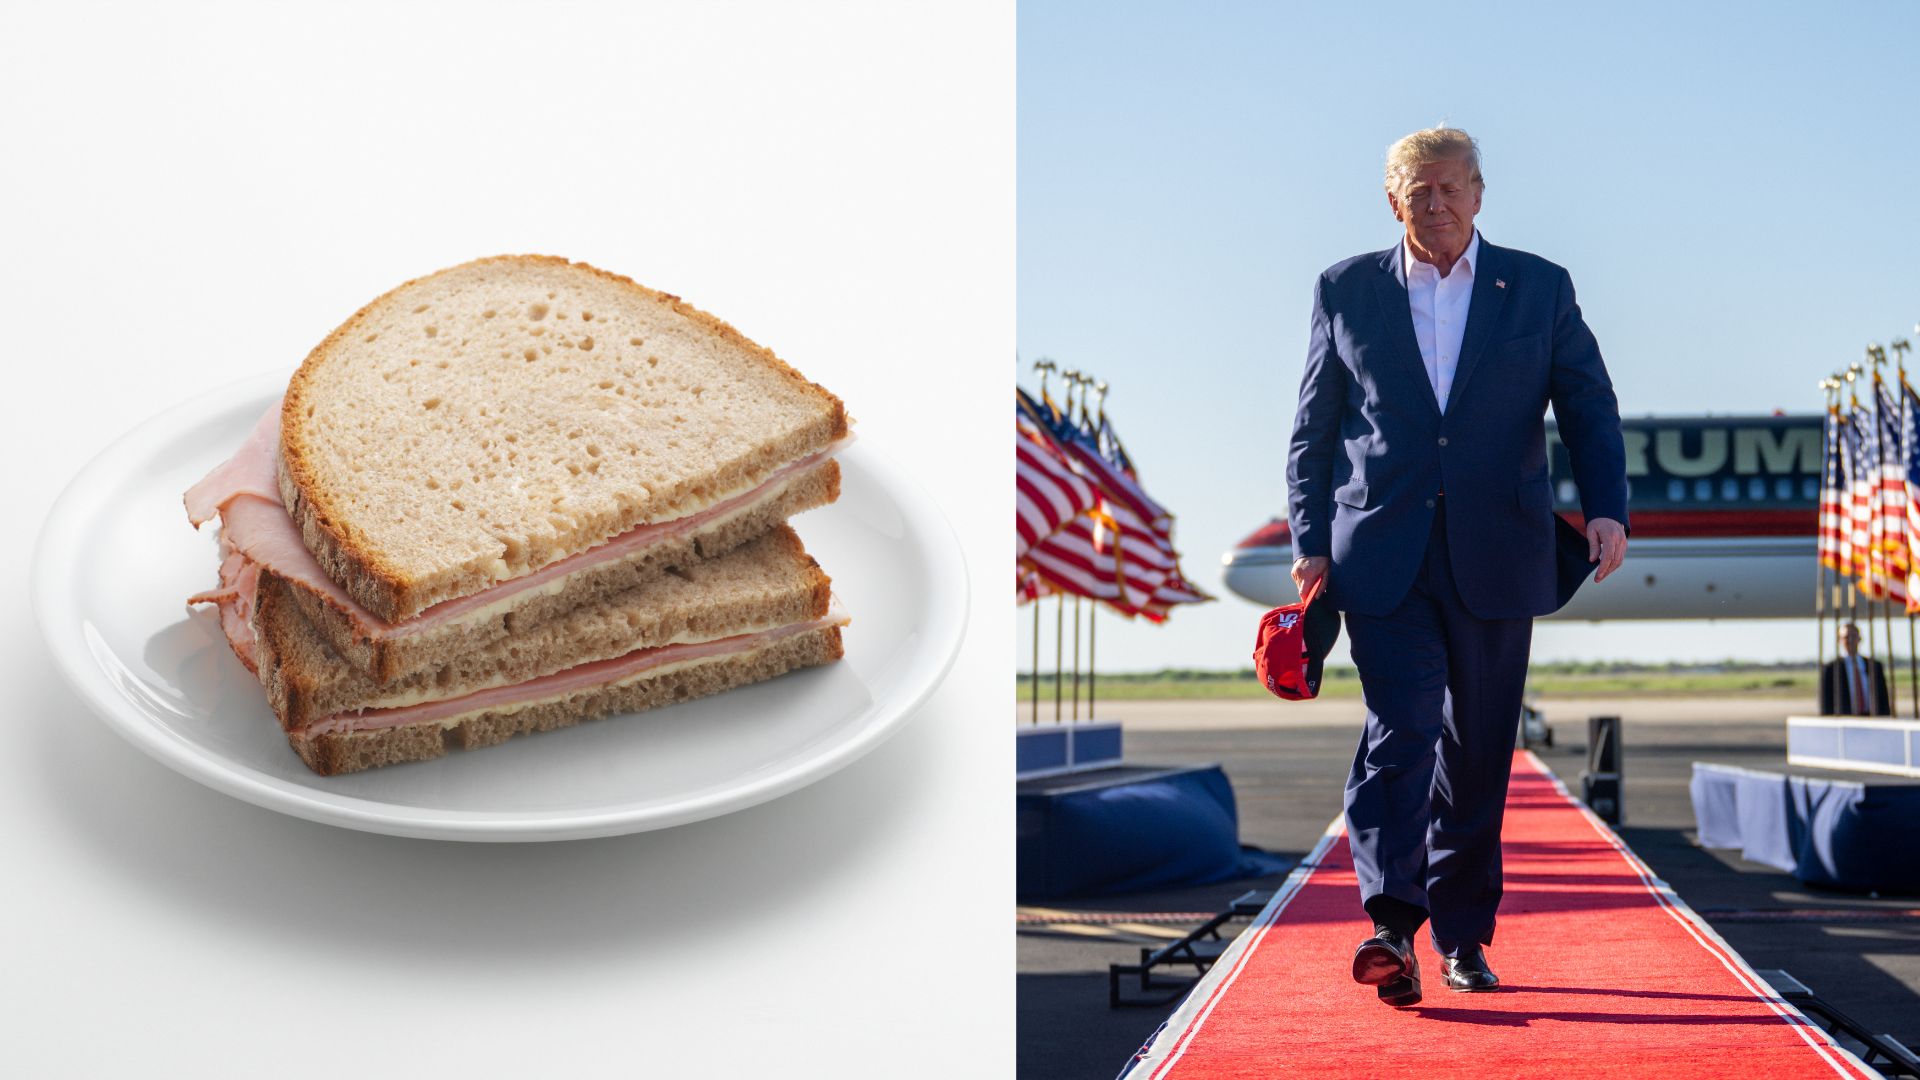 Dark Humor: GOP Congressman Hands Out ‘Indict This’ Ham Sandwiches To Mark Trump Indictment